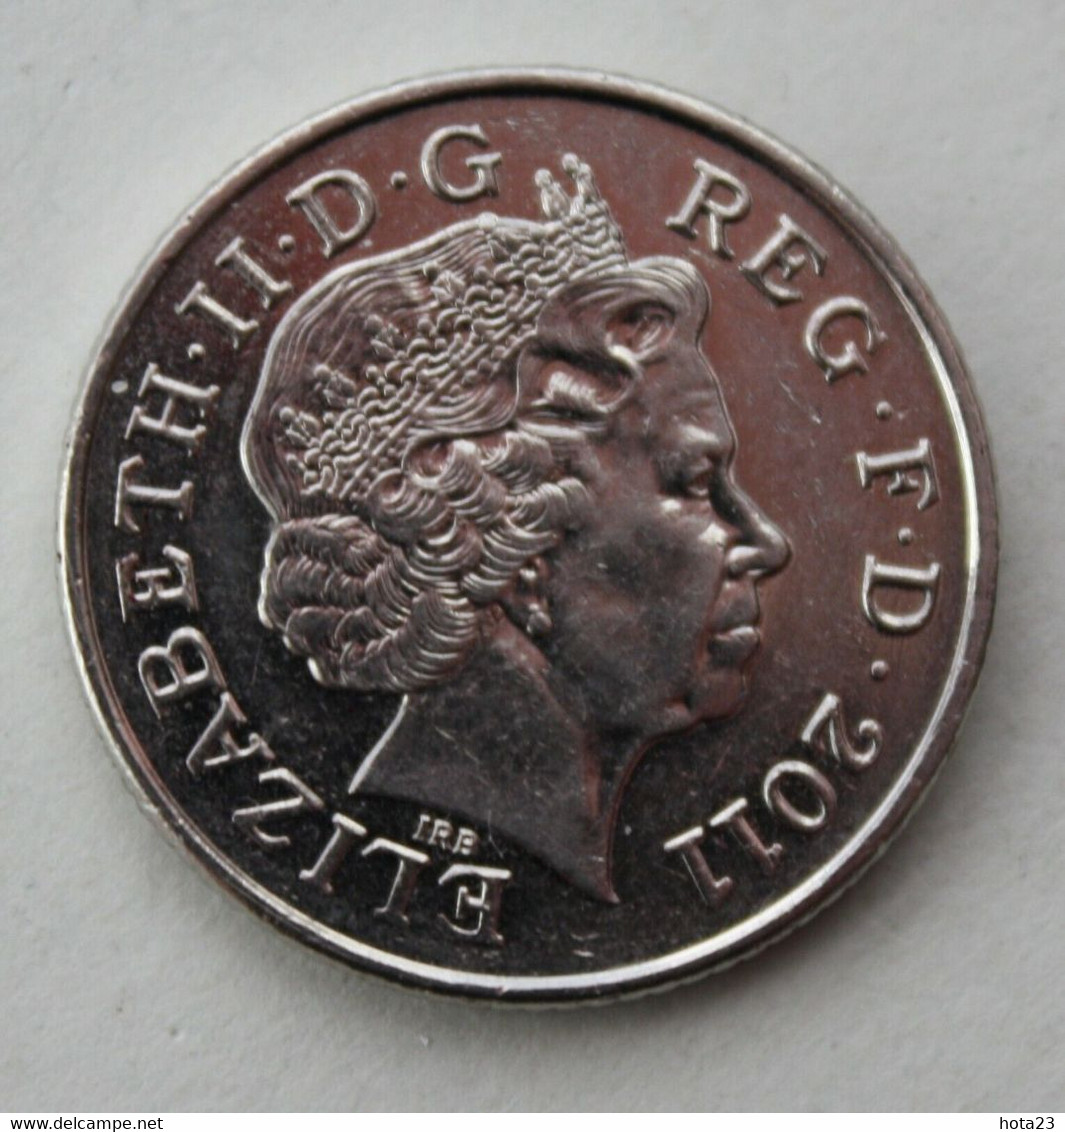 British, Queen Elizabeth II, 2011, Part Shield 10p Coin. Ten Pence - 10 Pence & 10 New Pence